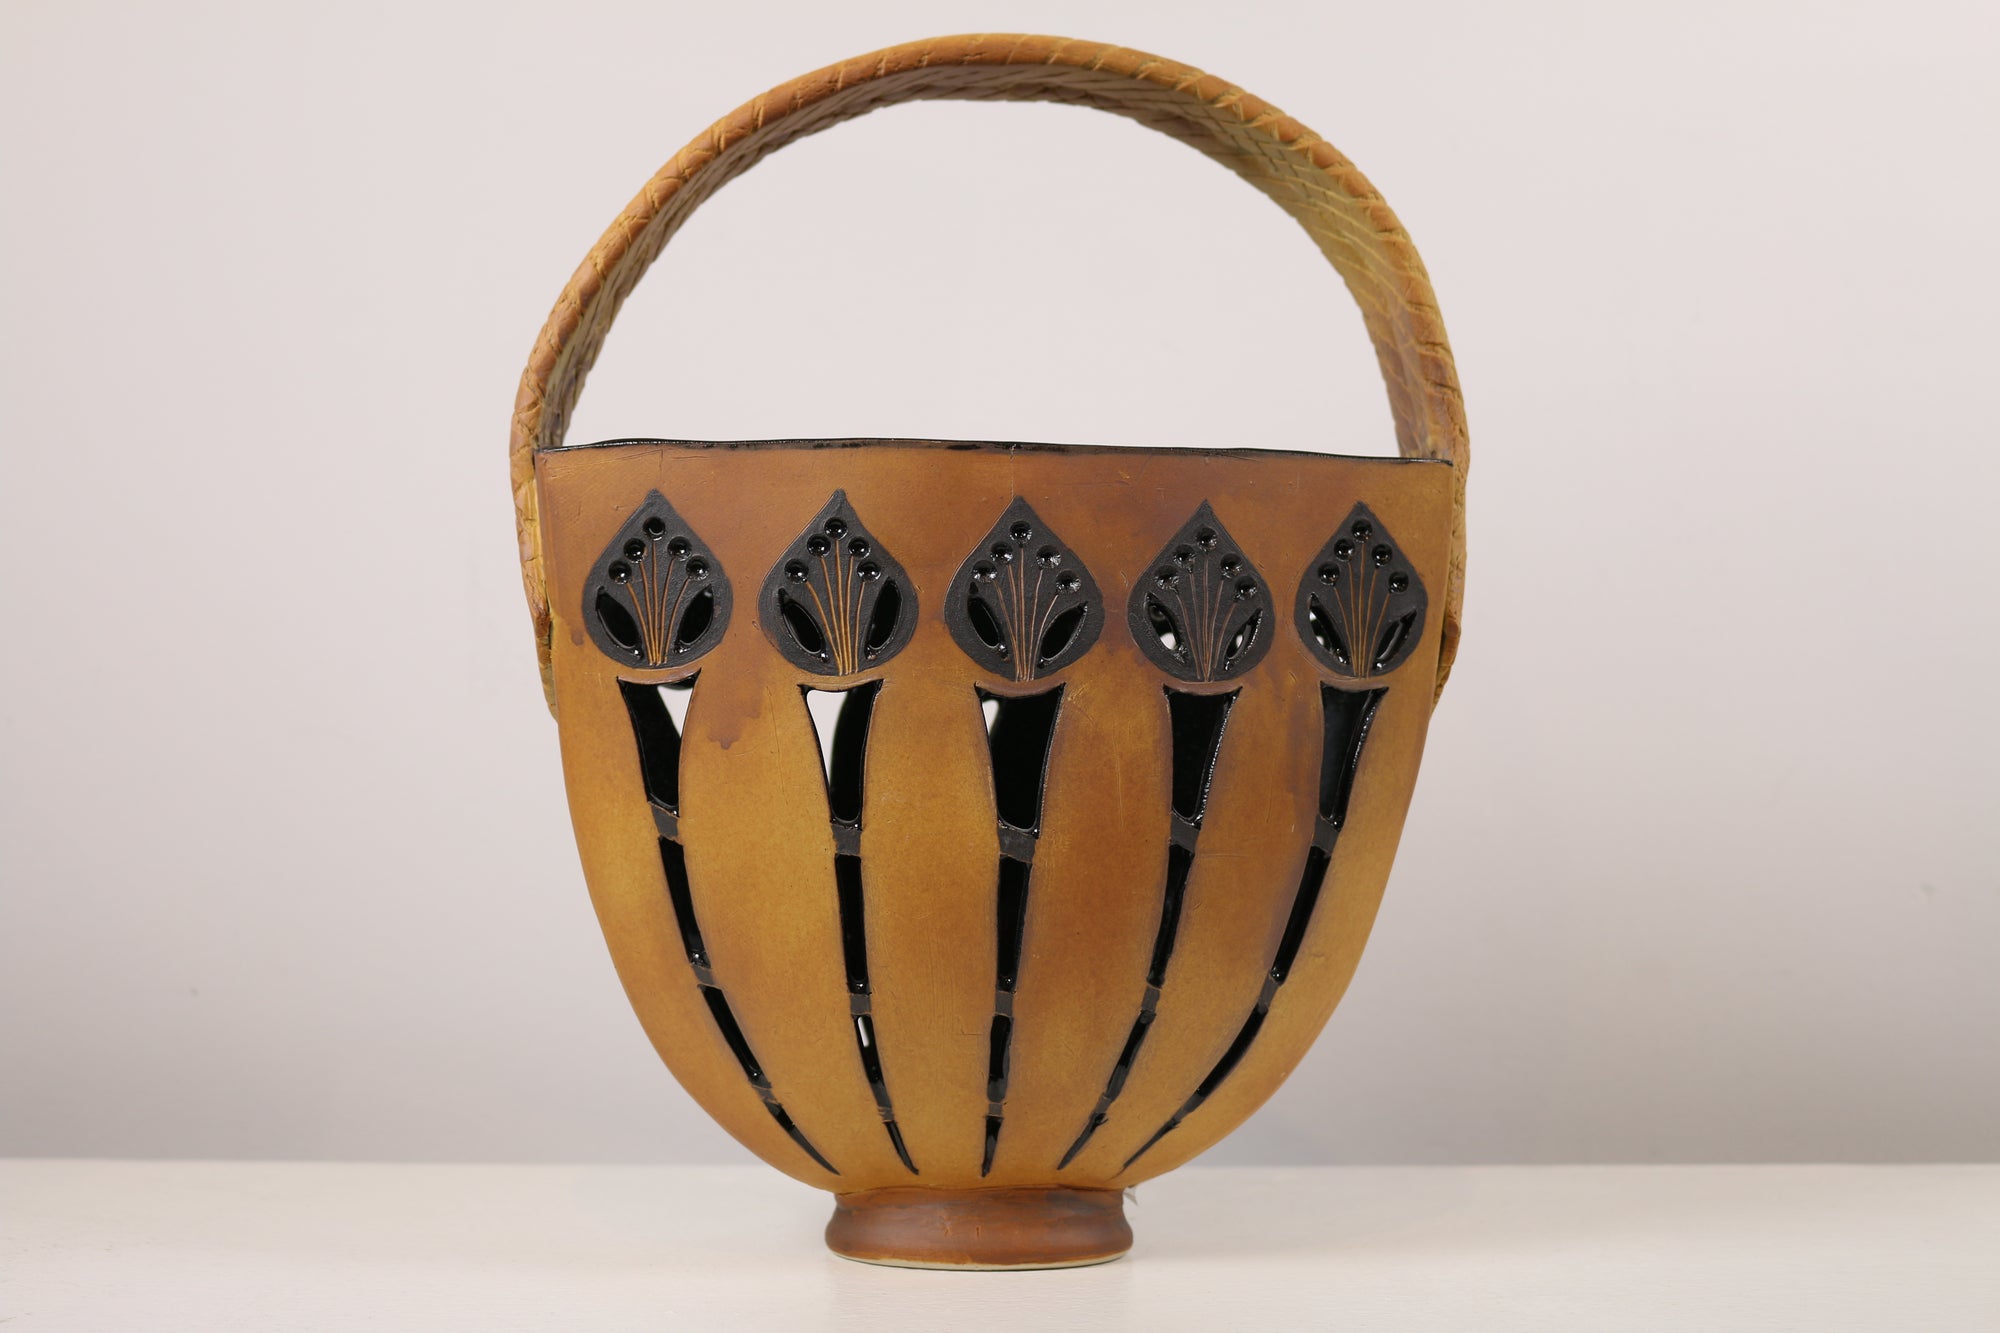 Ceramic Basket with Decorative Leaves